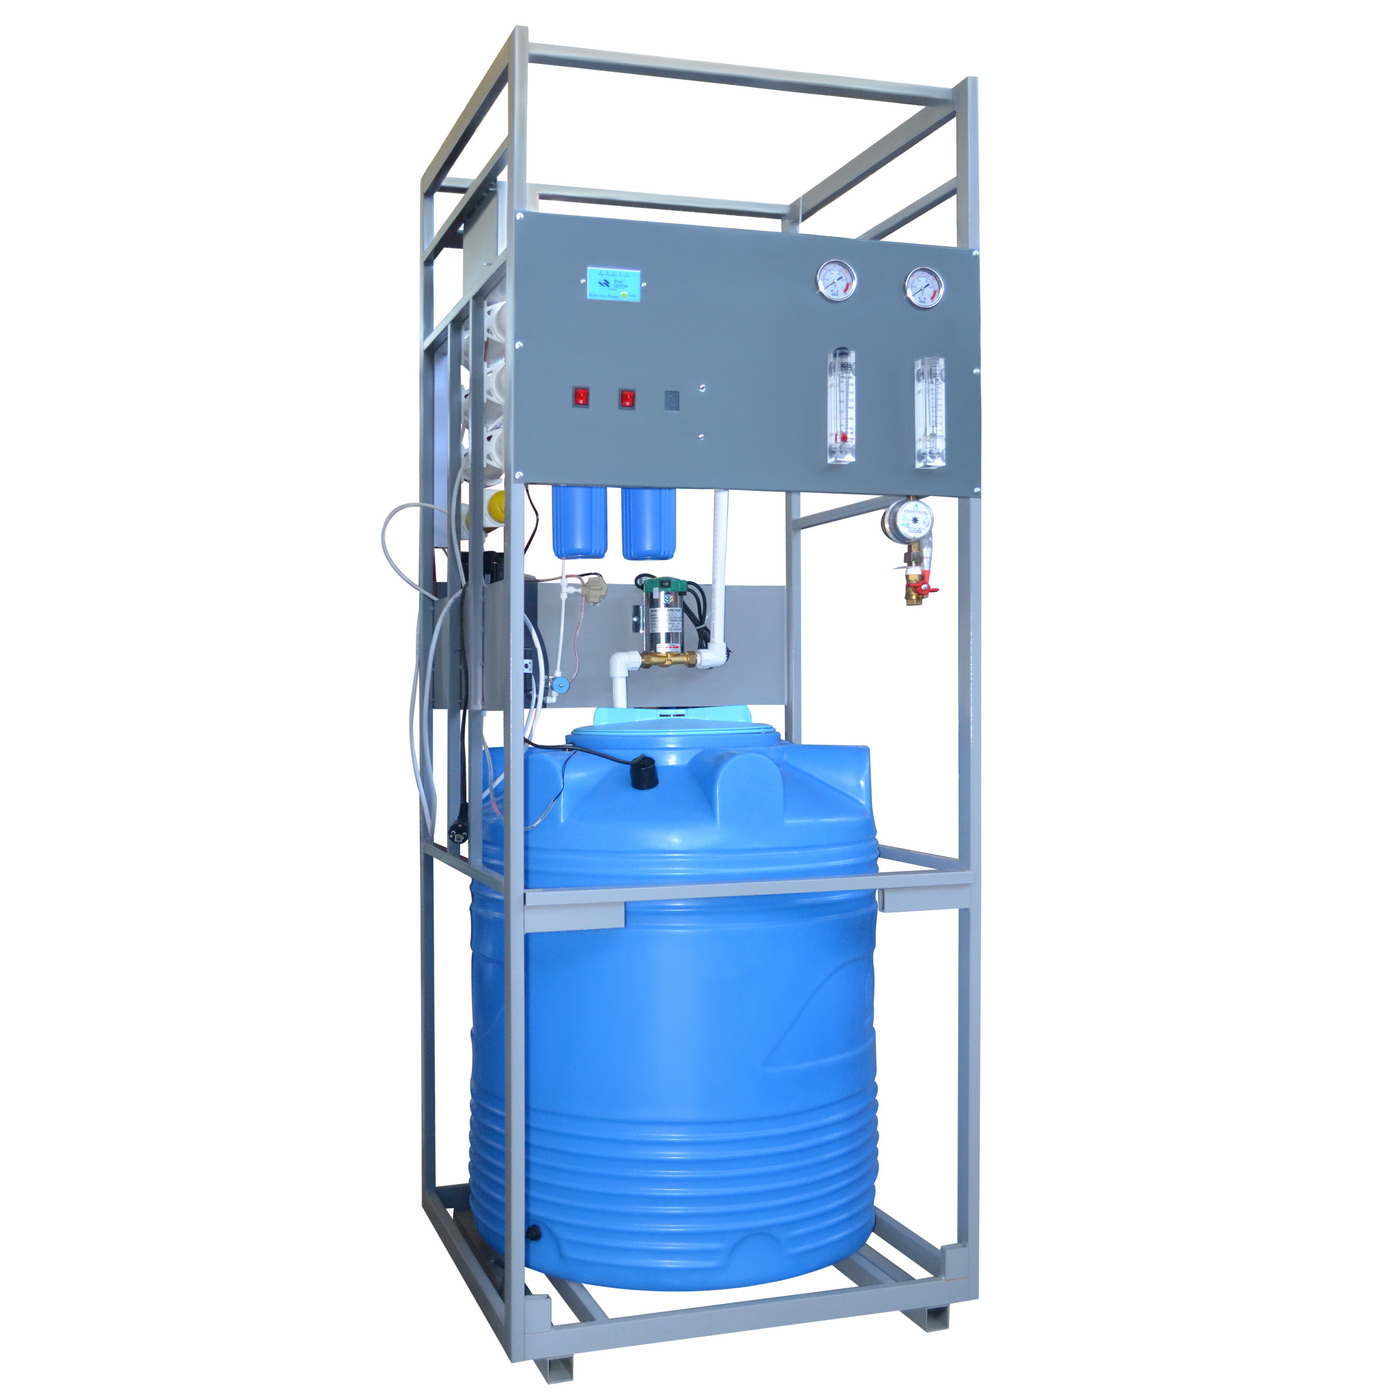 Очищенная вода автомат. АКВАЛАБ 300. ВАТЕРВЕНД автоматы питьевой. АКВАЛАБ 3000. АКВАЛАБ ДВС-М/5-1 (исп02) с гидроаккумулятором.